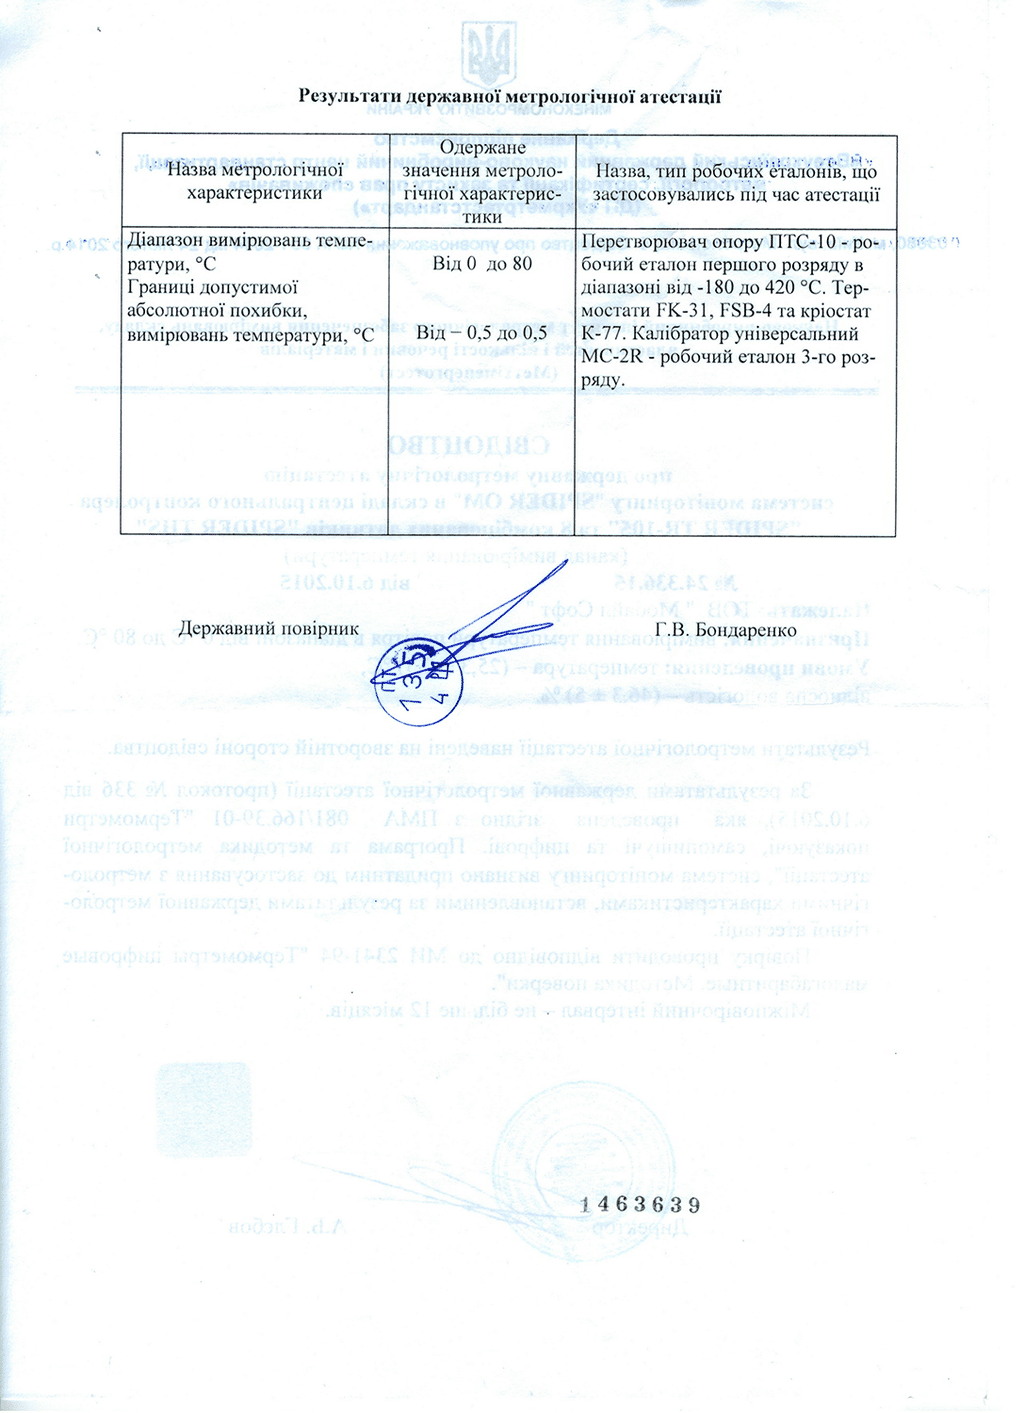 Climatic-metrological-certificate-p2